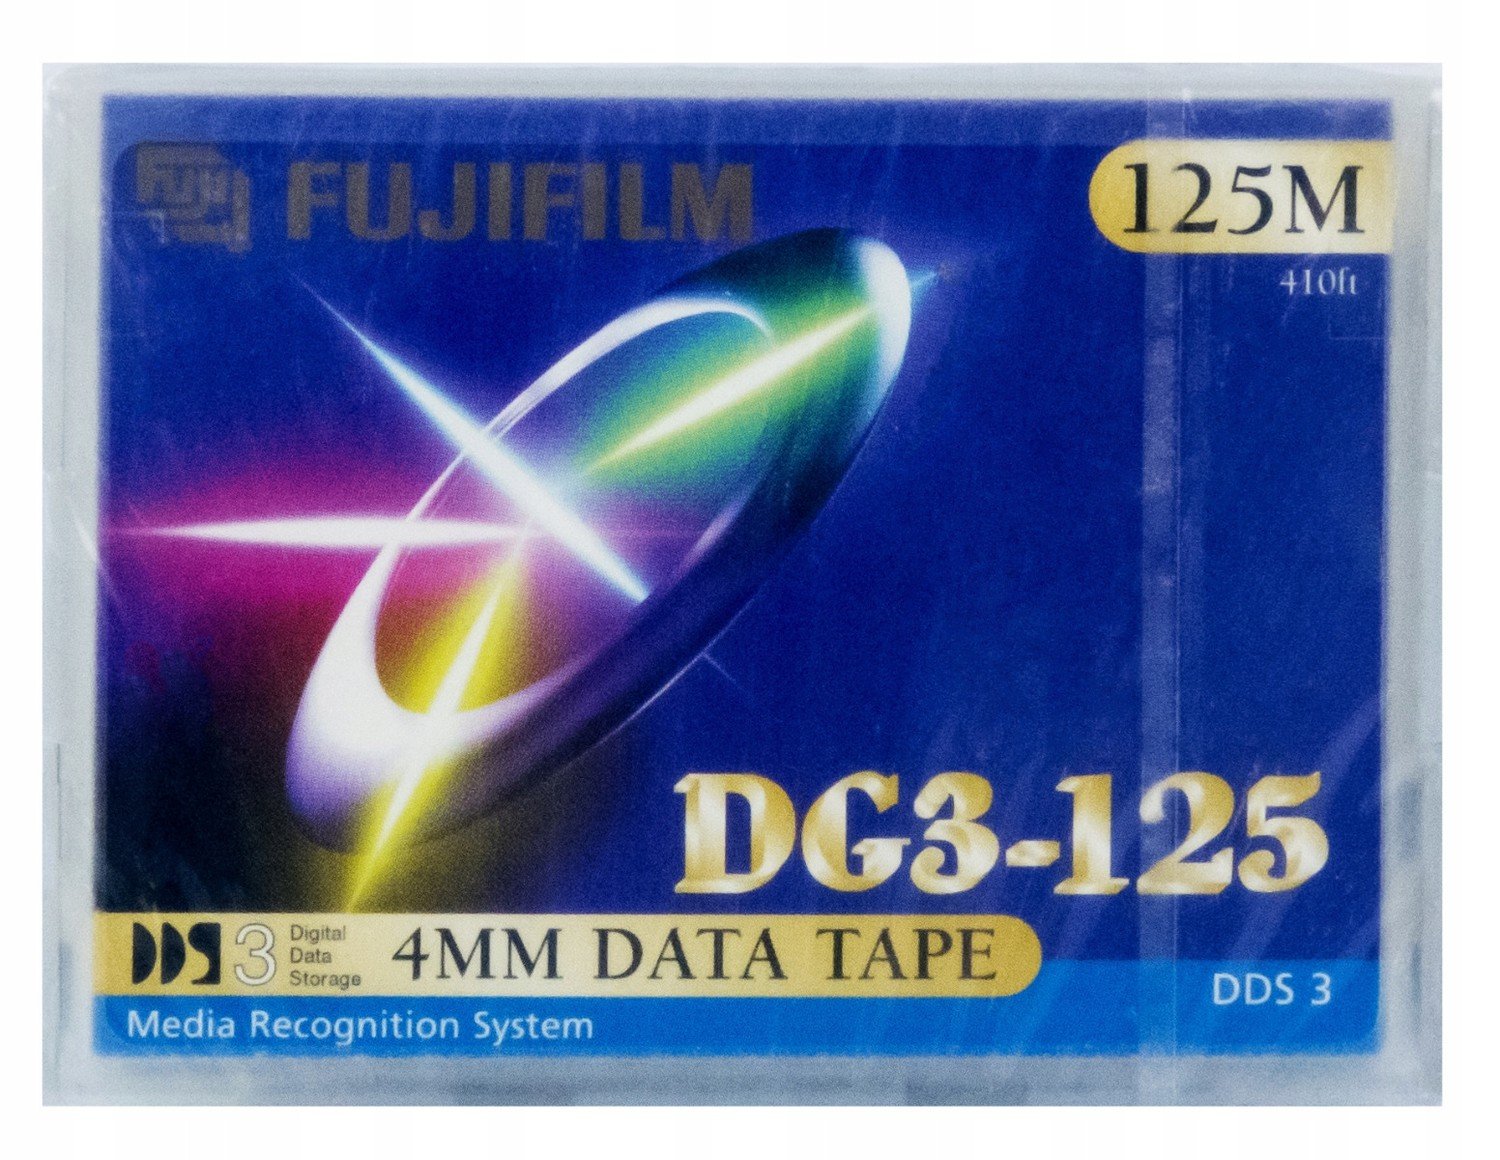 Datová Karta Fujifilm DG3-125 DDS-3 125m 4mm